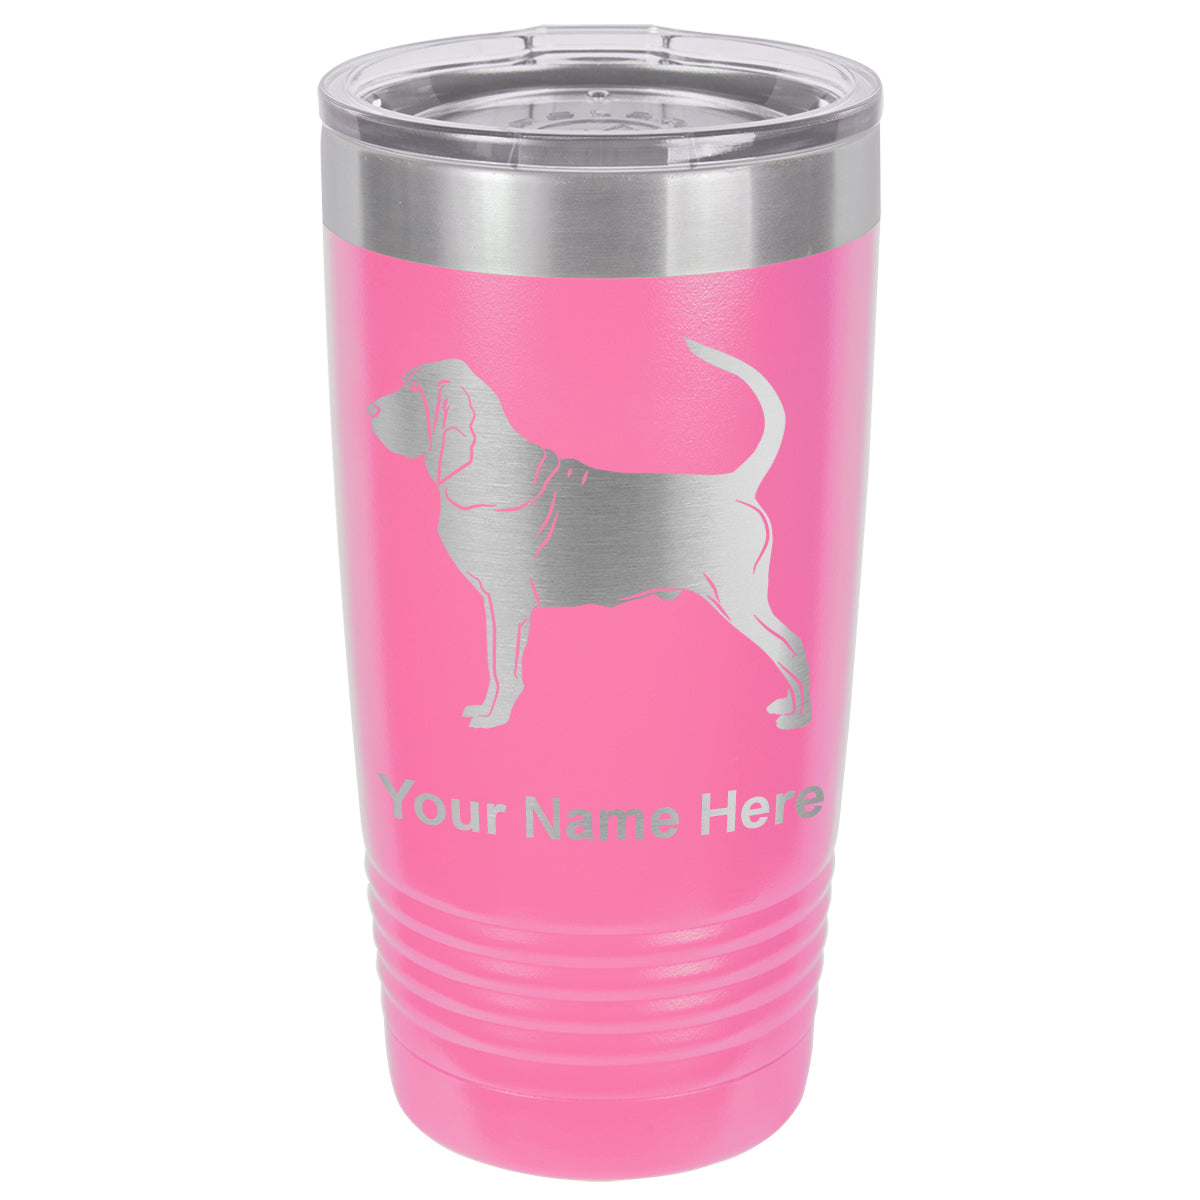 20oz Vacuum Insulated Tumbler Mug, Bloodhound Dog, Personalized Engraving Included